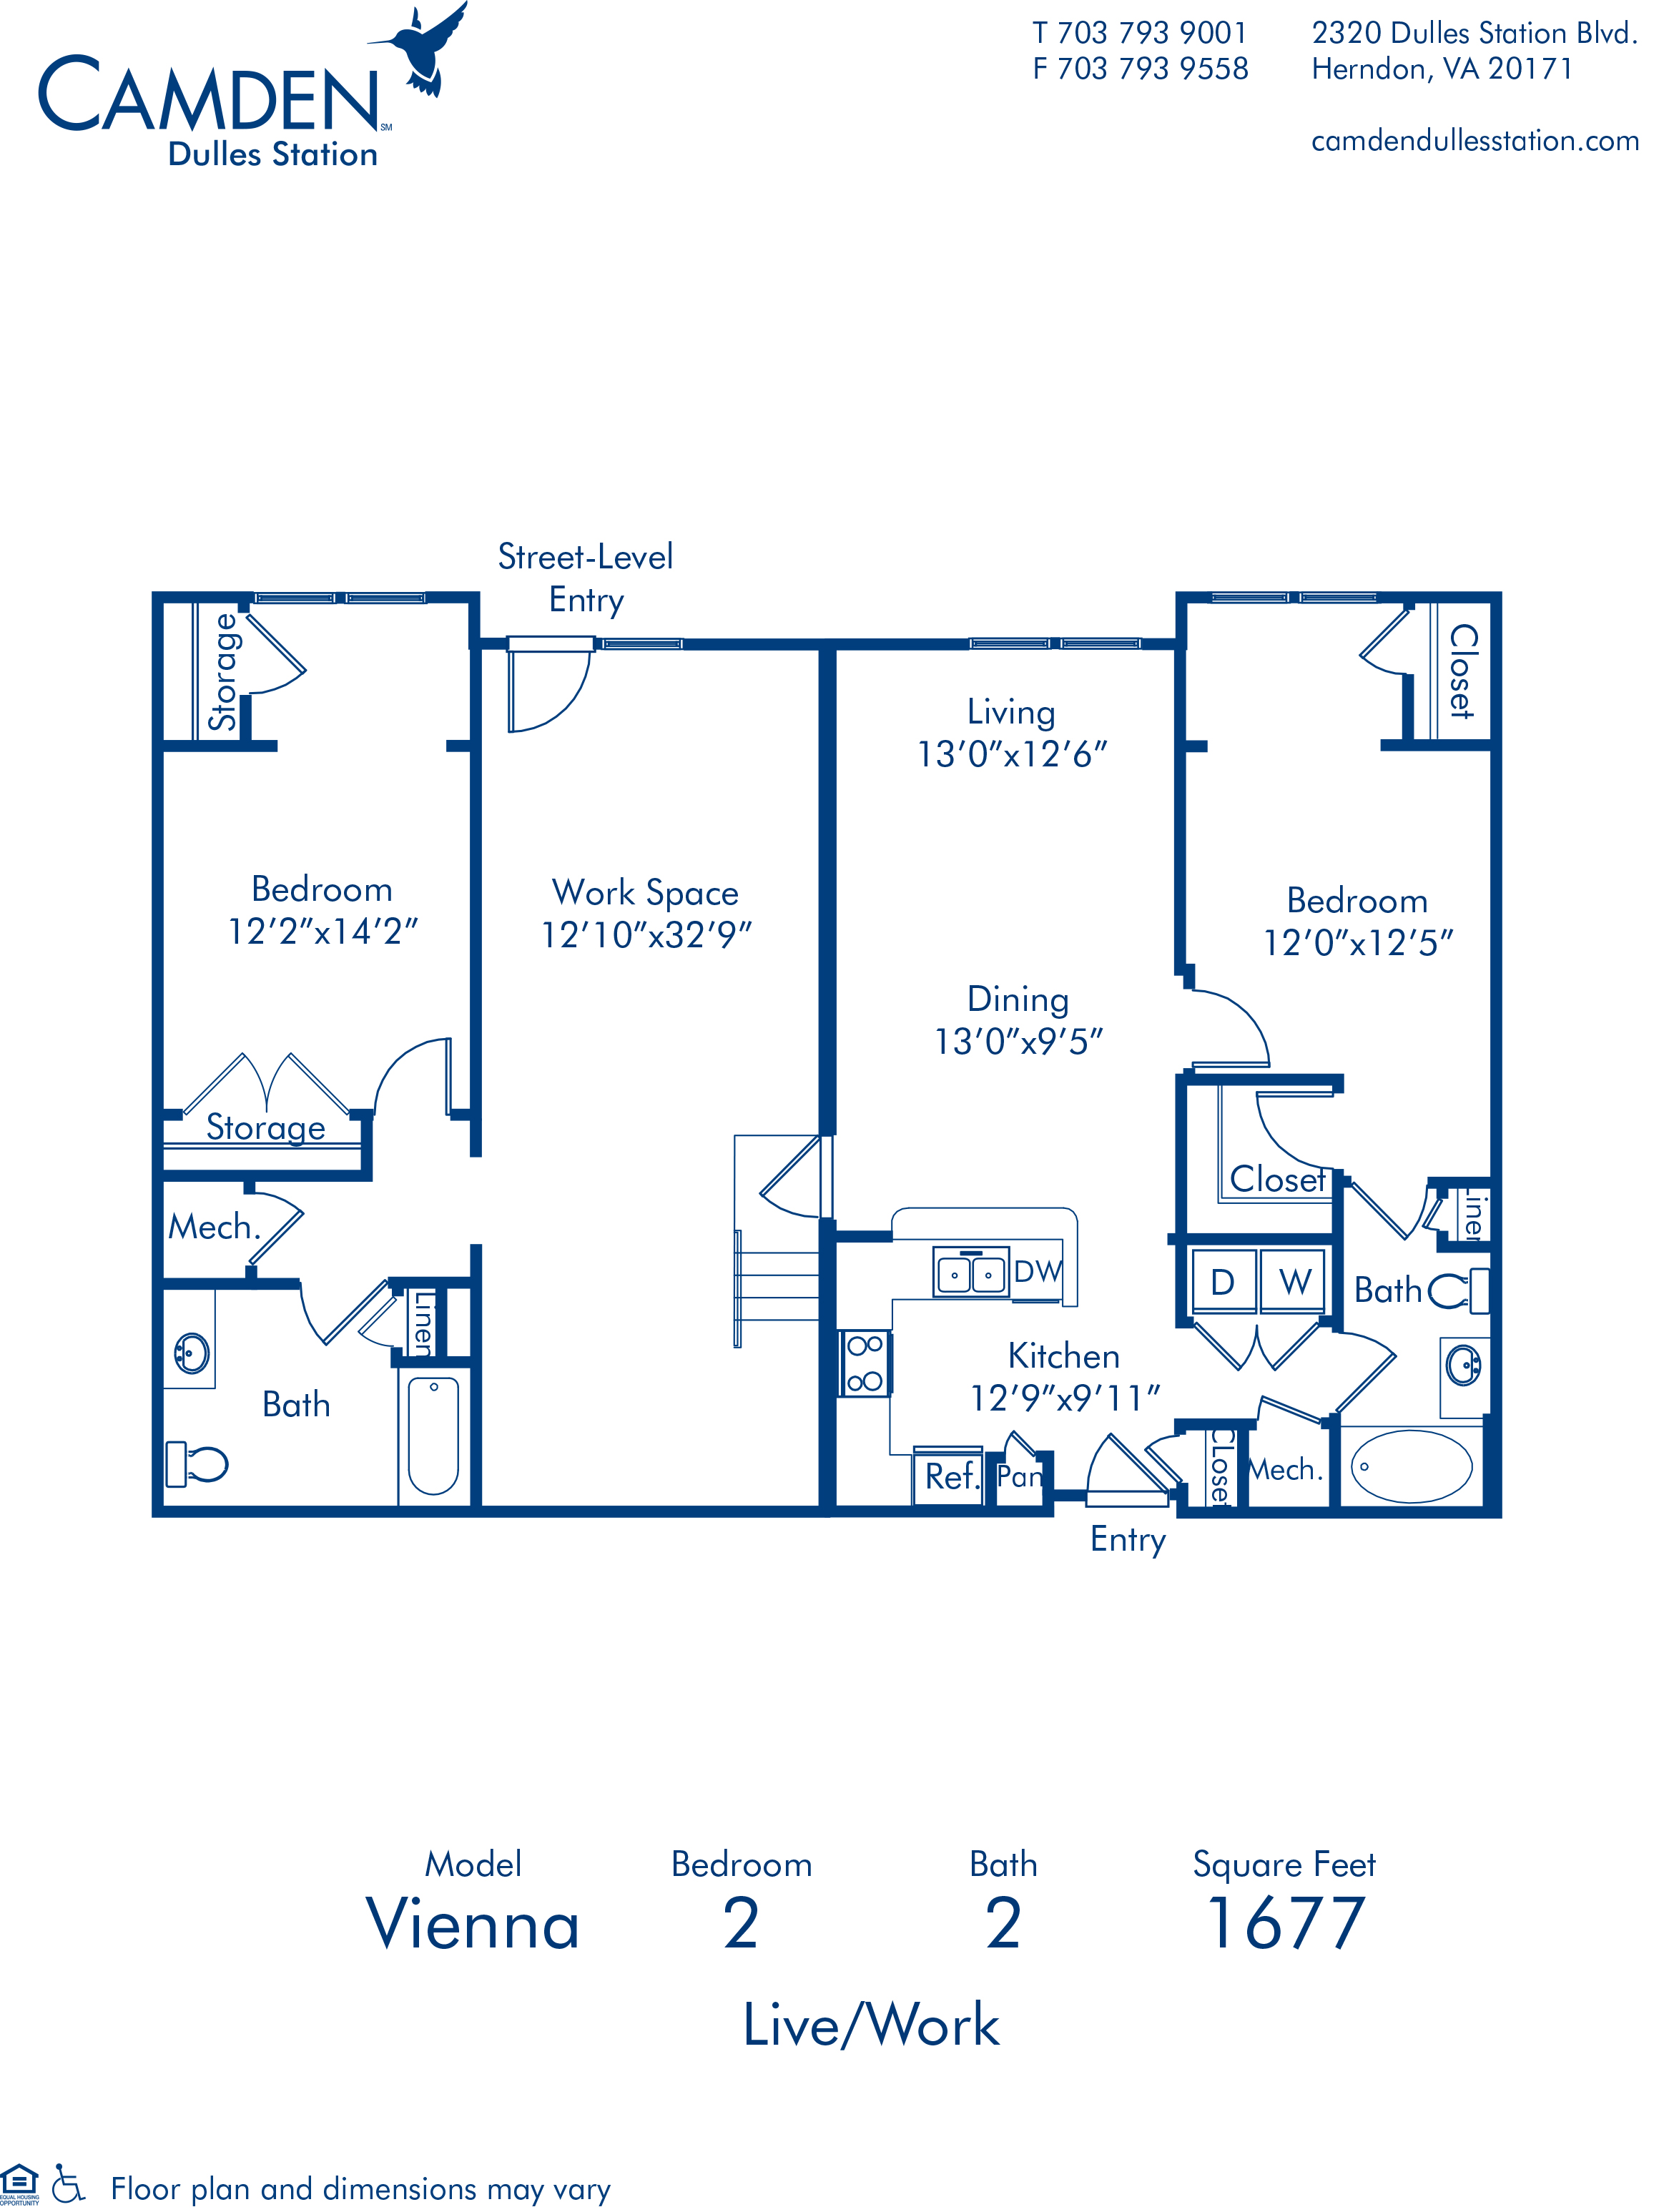 1, 2 & 3 Bedroom Apartments in Herndon, VA - Camden Dulles Station